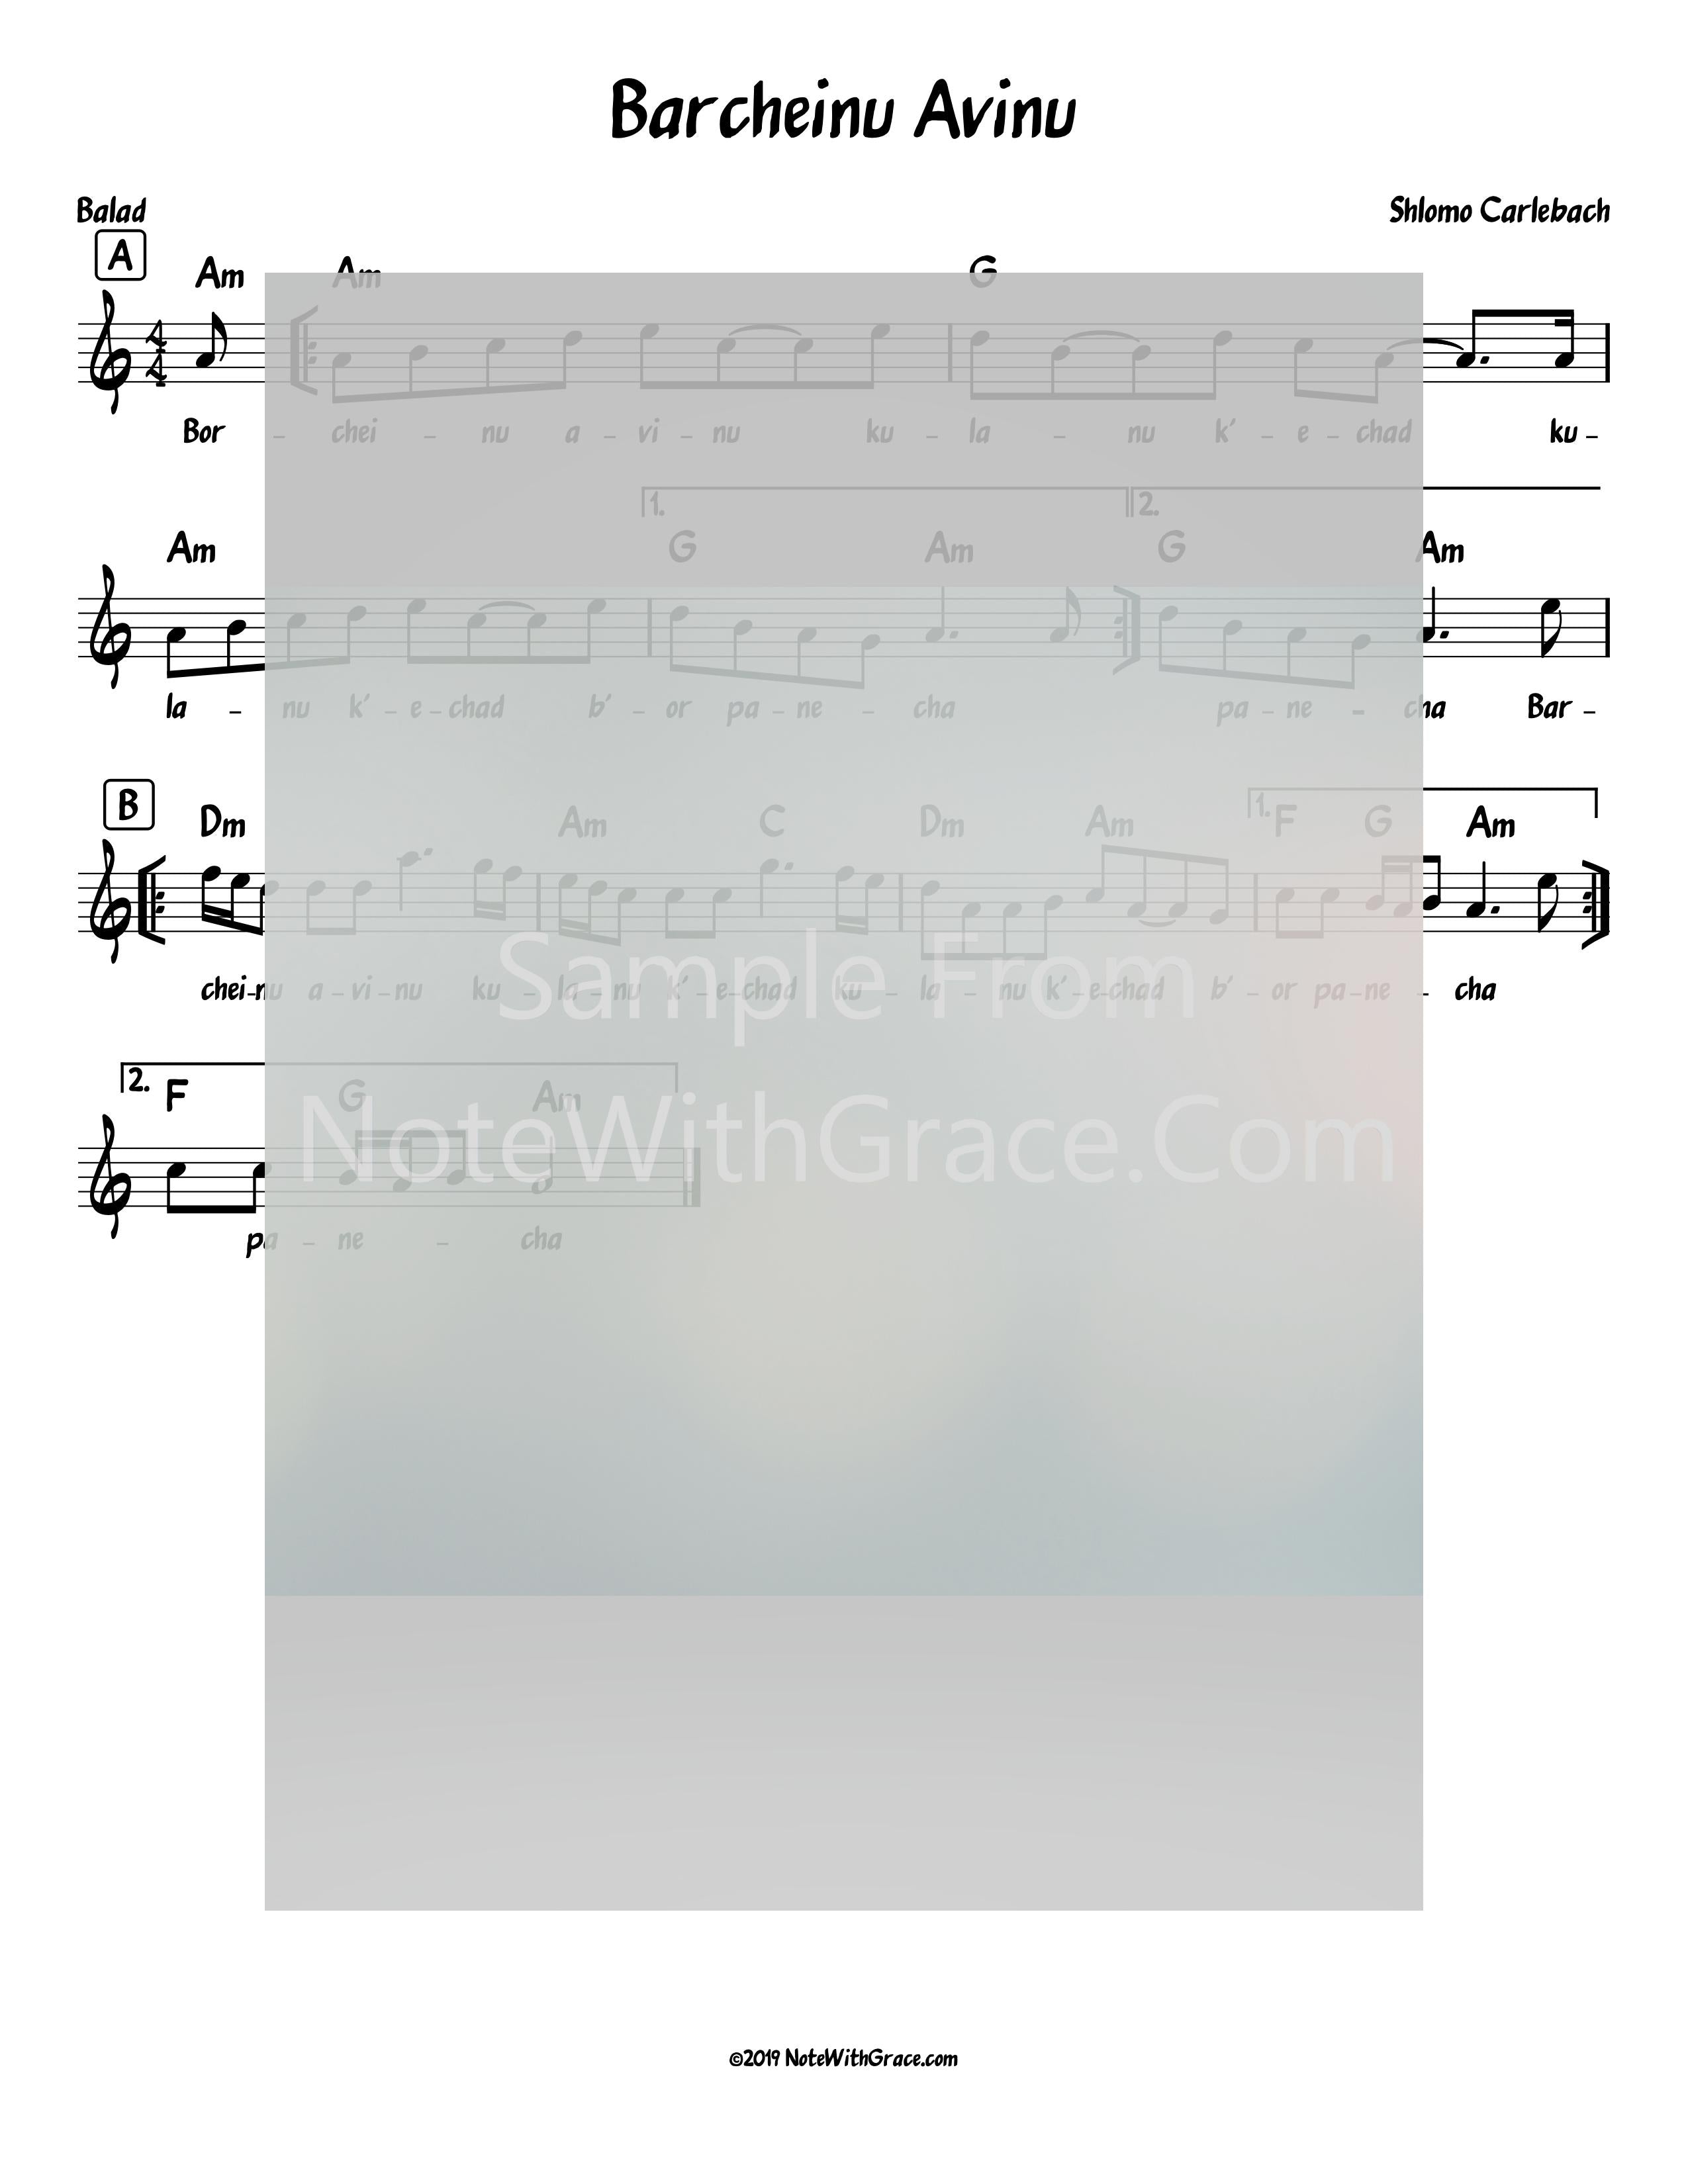 Barcheinu Avinu Lead Sheet (Shlomo Carlebach)-Sheet music-NoteWithGrace.com